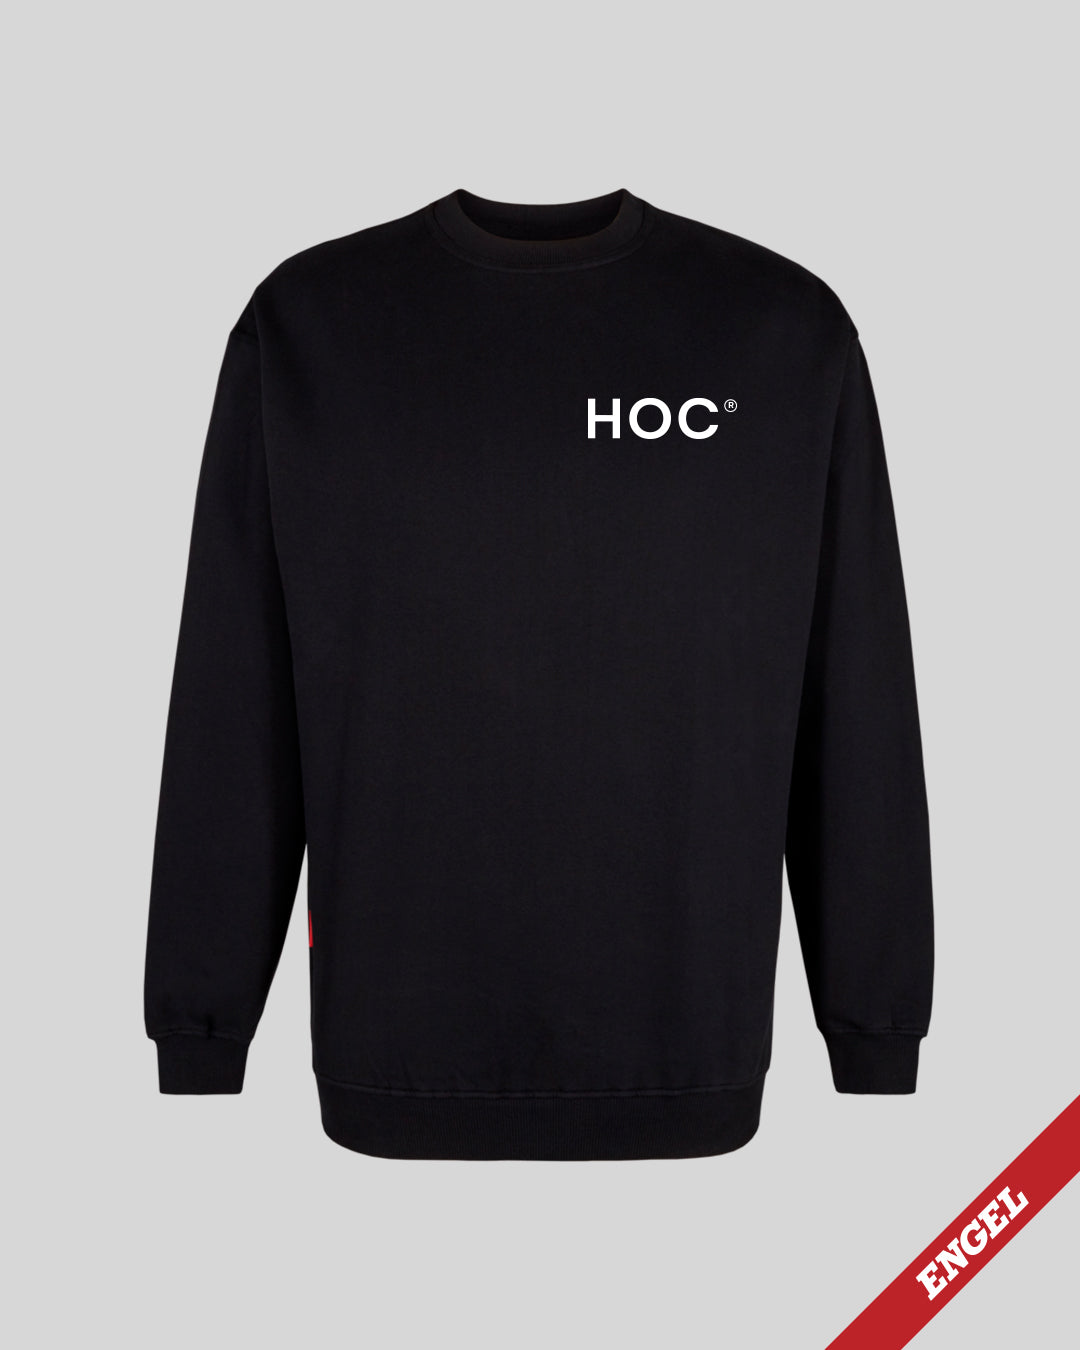 HOC sweatshirt - Midnight Black